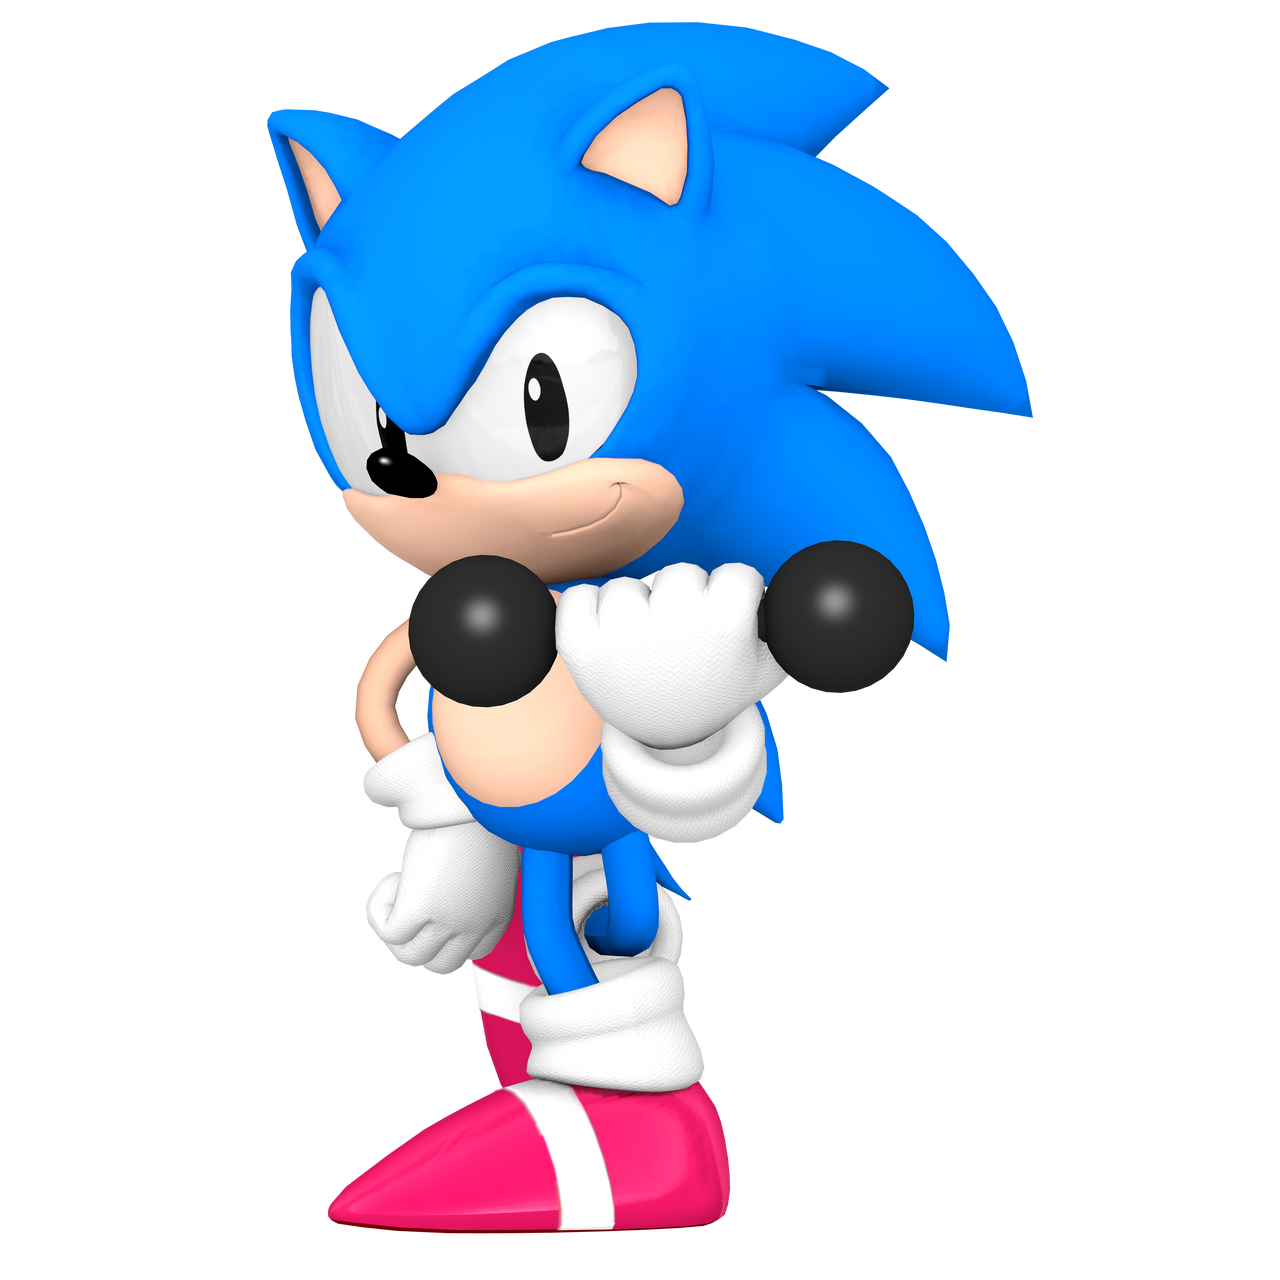 Classic Sonic  Sonic the Hedgehog 2 Render by bandicootbrawl96 on